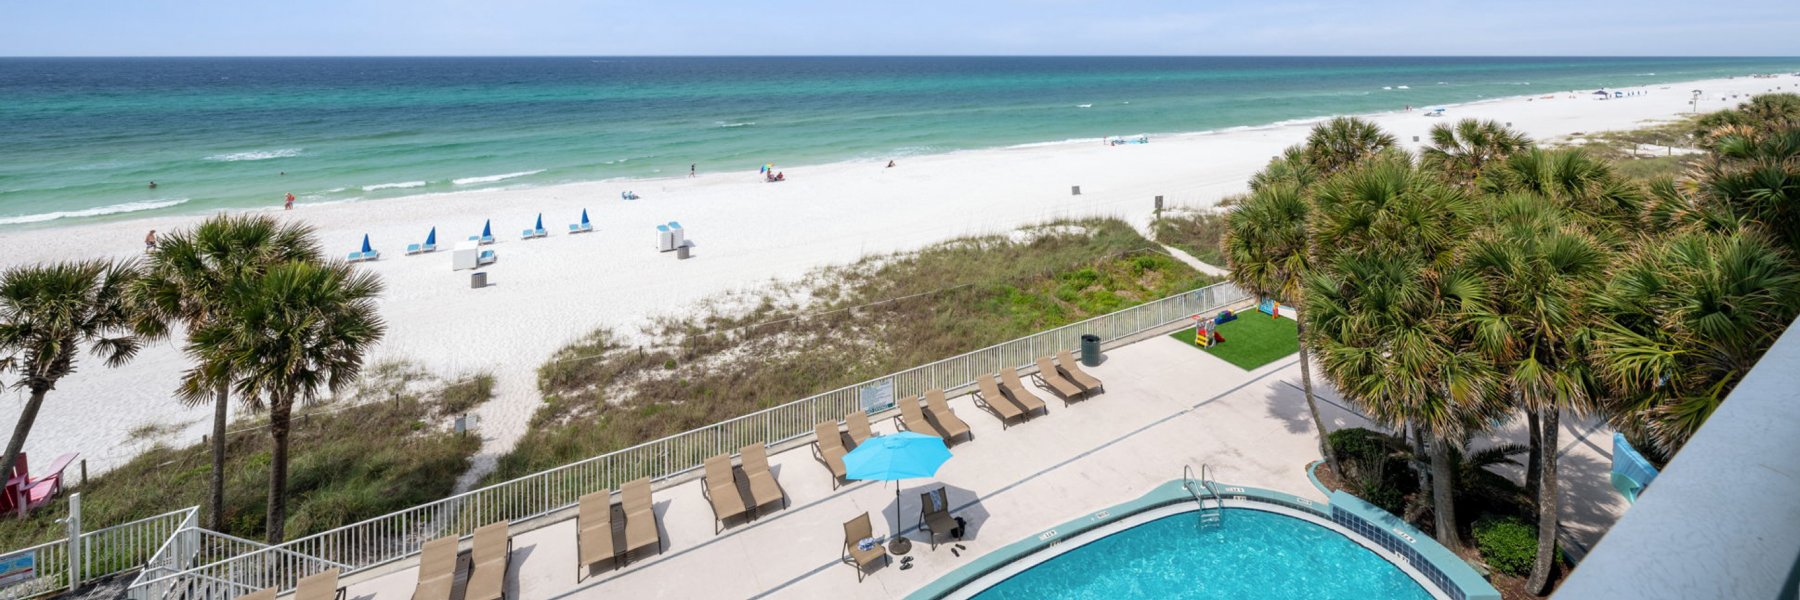 Experience Beachcomber Beachfront Hotel, Florida